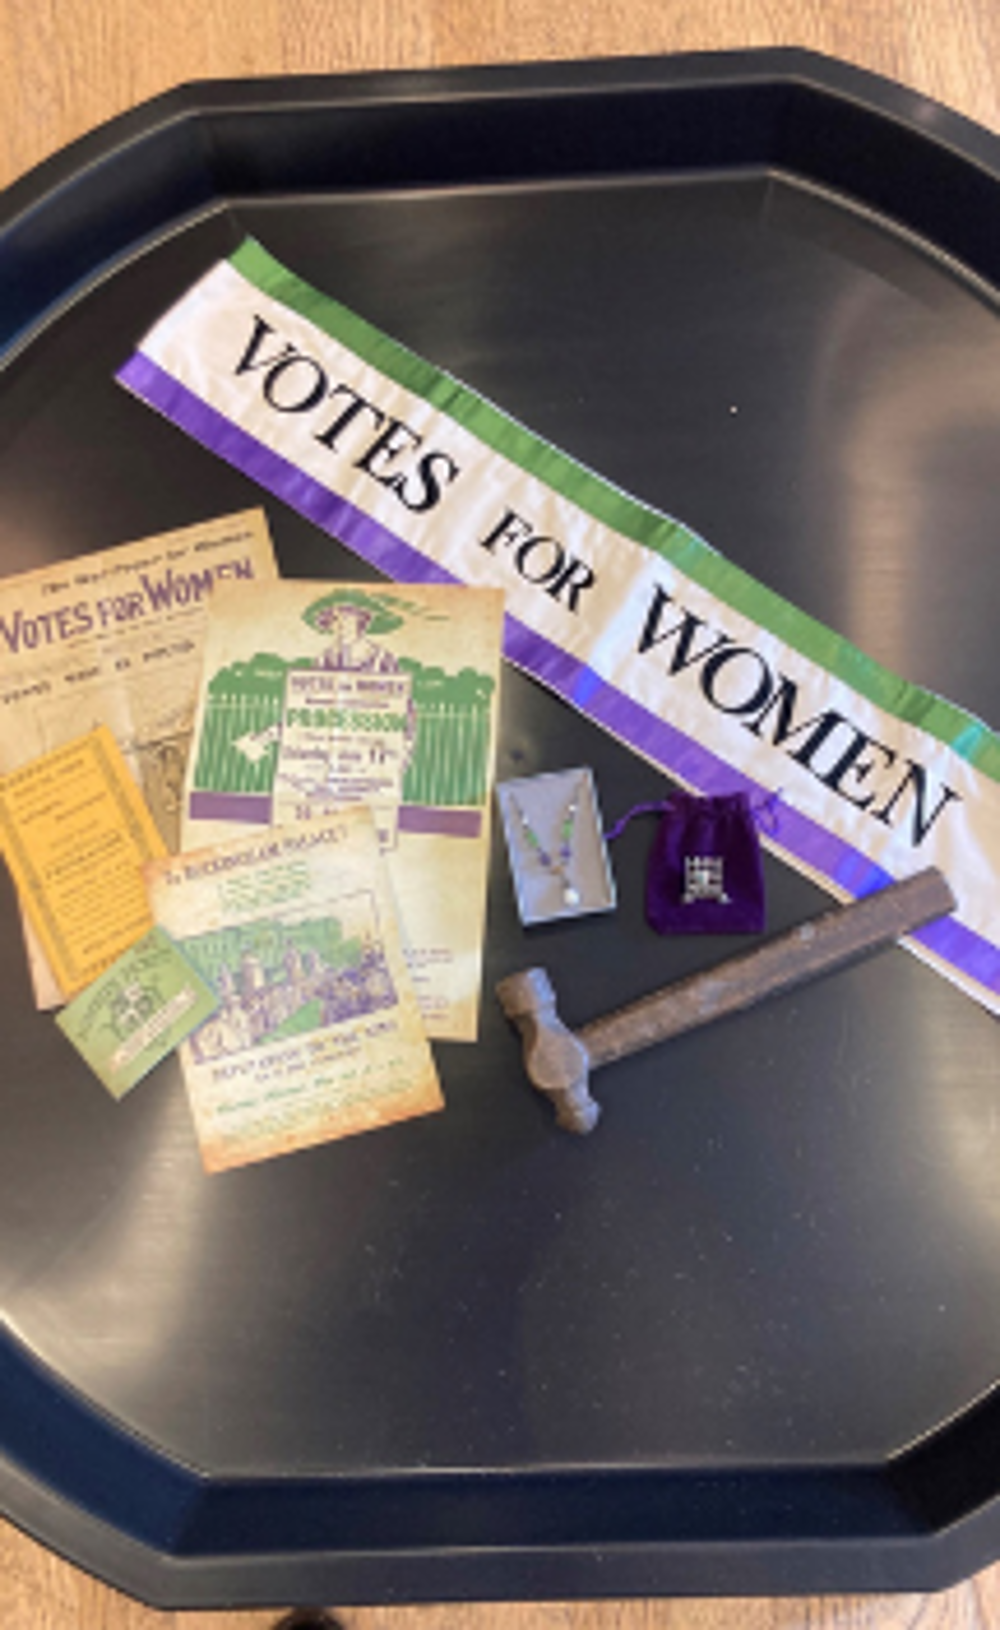 Suffragette items